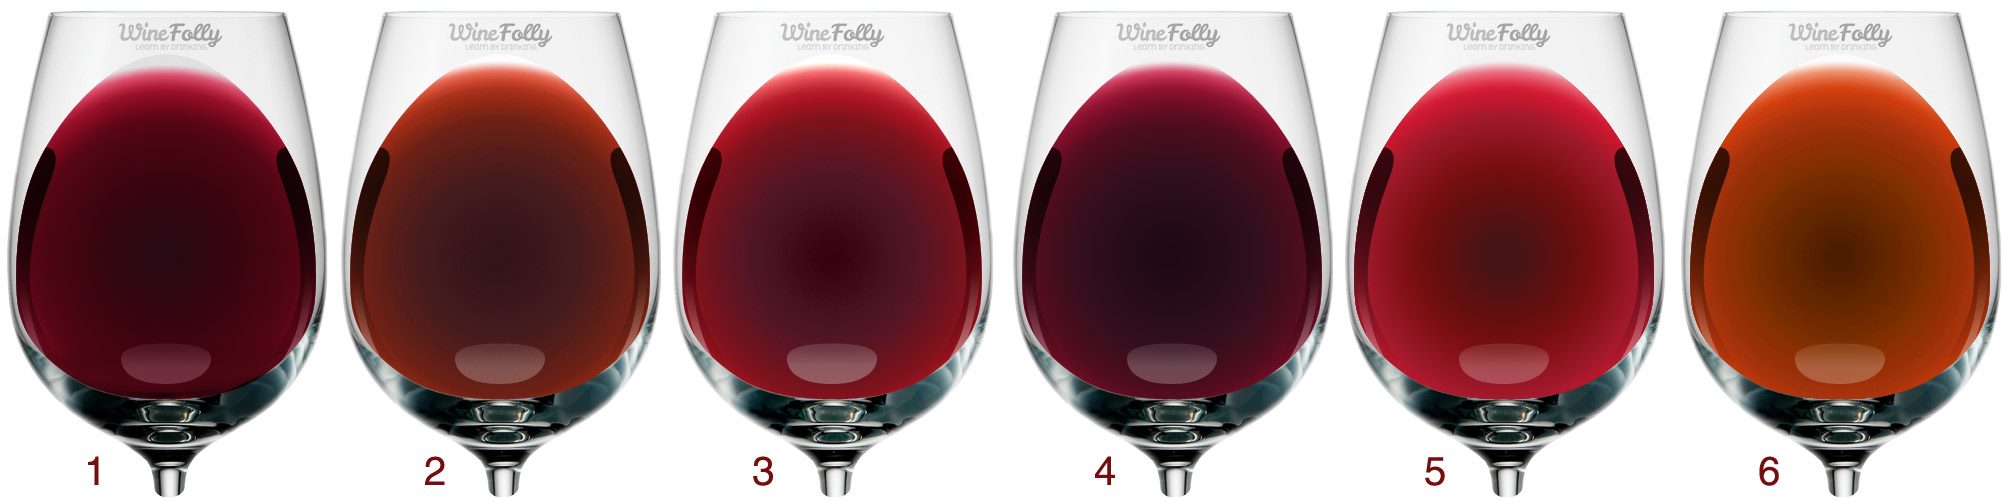 Foto de diferentes cores de vinho.